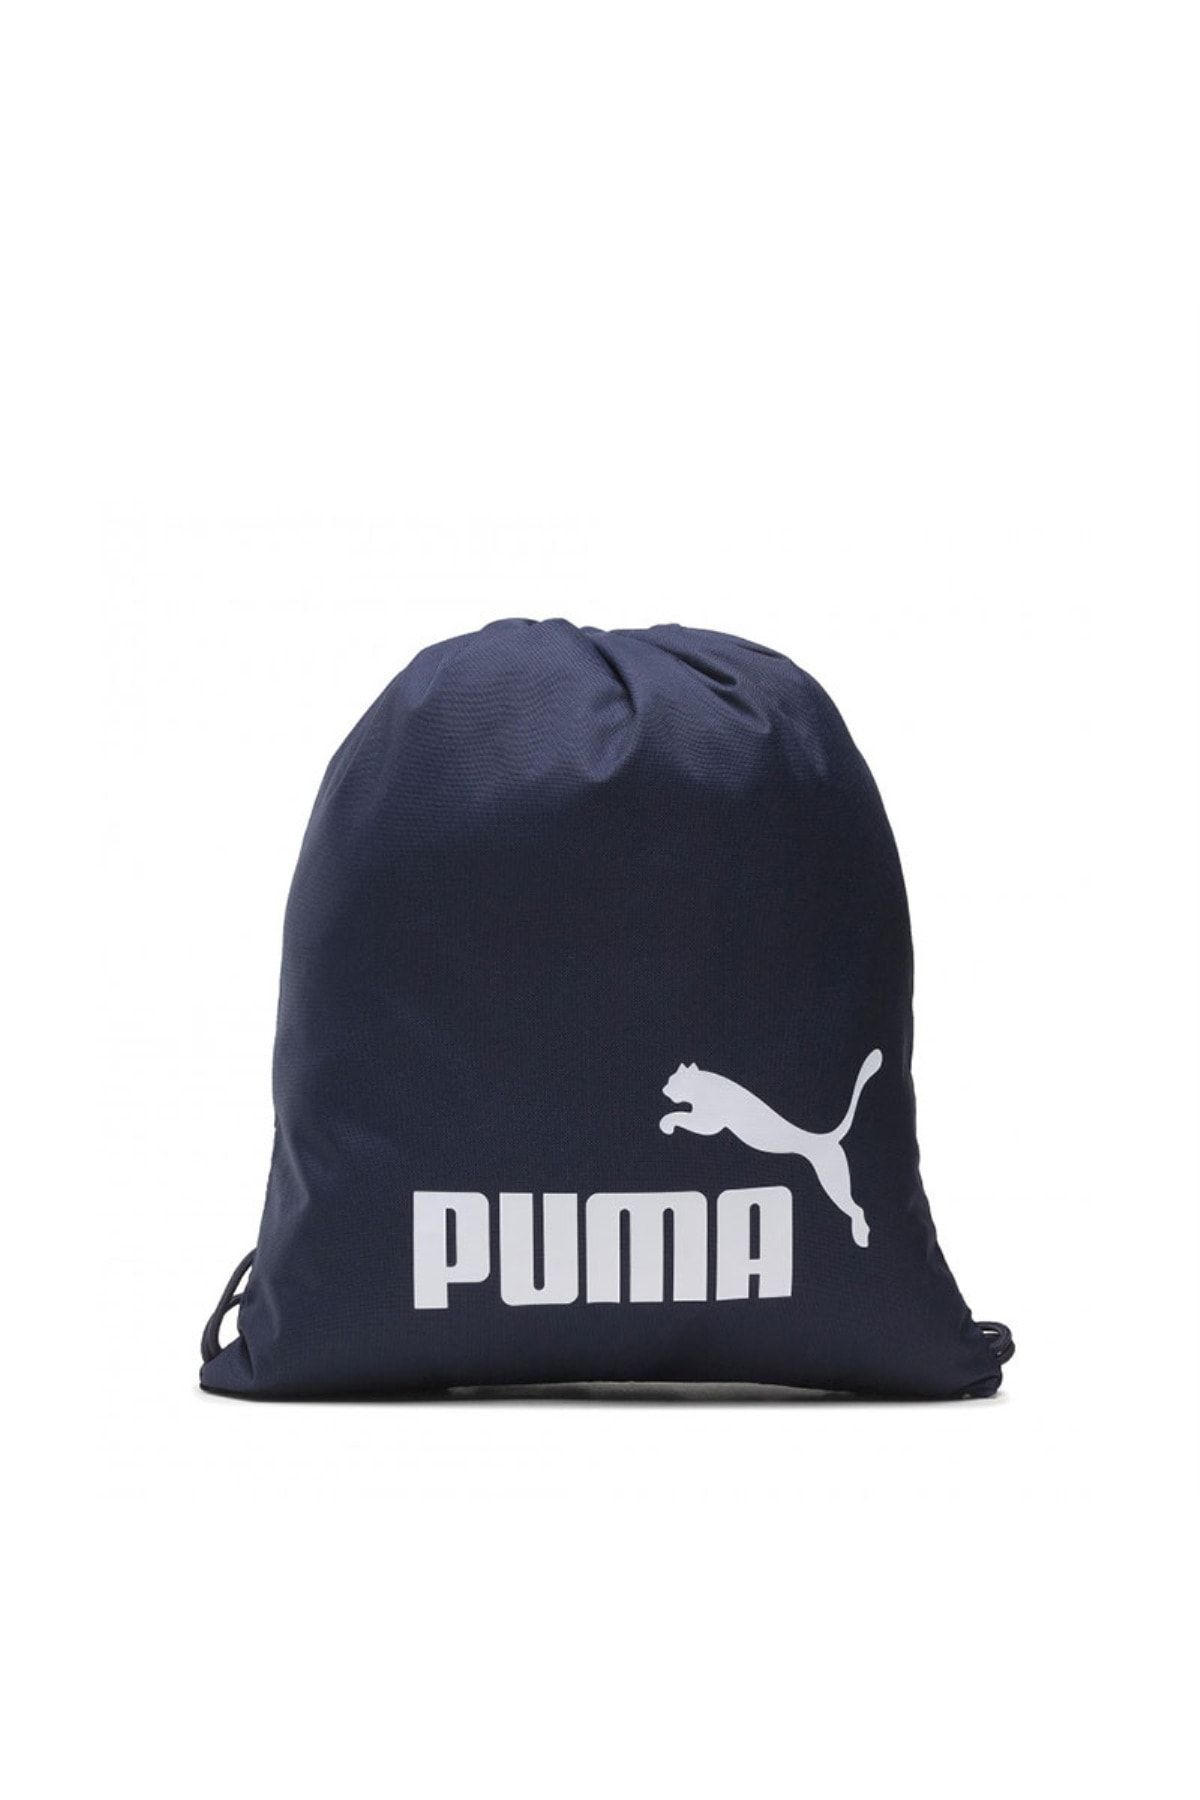 Puma Phase Gym Sack - Lacivert Büzgülü Spor Çanta